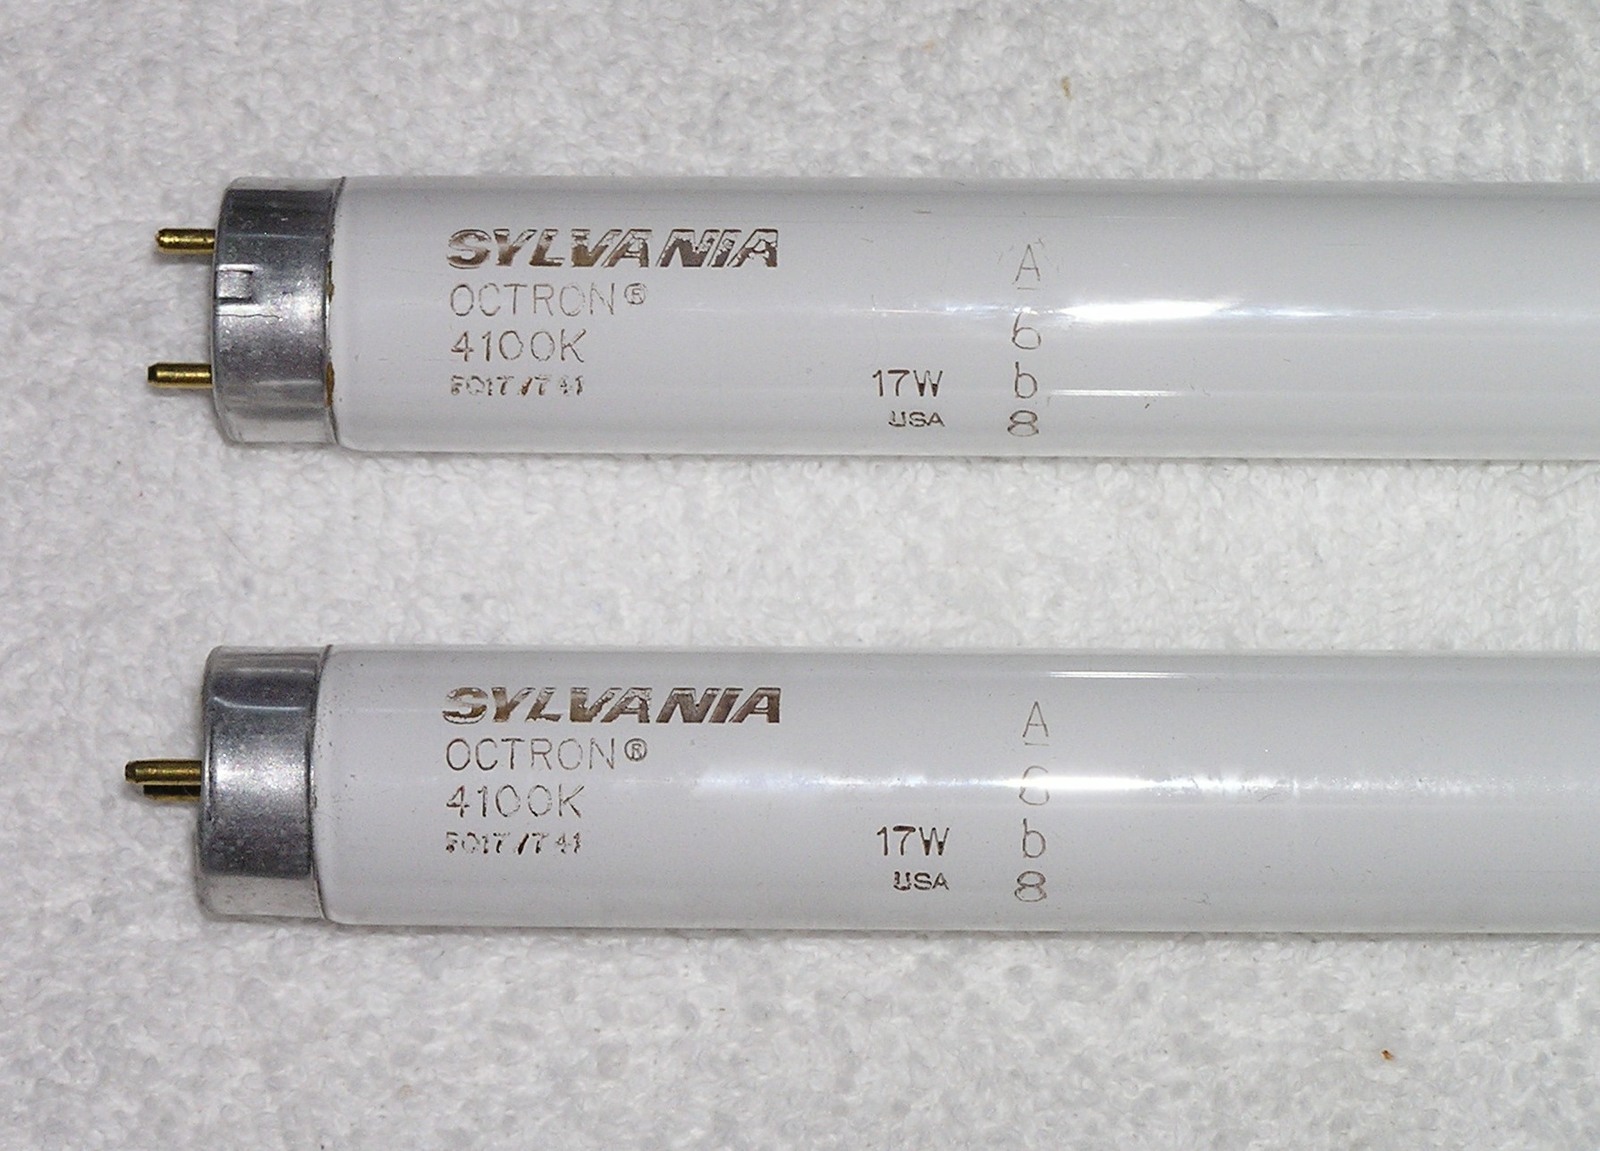 Lot of 2 Sylvania FO17/741 4100K Octron 17 Watt Fluorescent Lamp Bulb F17T8 24" - $9.99